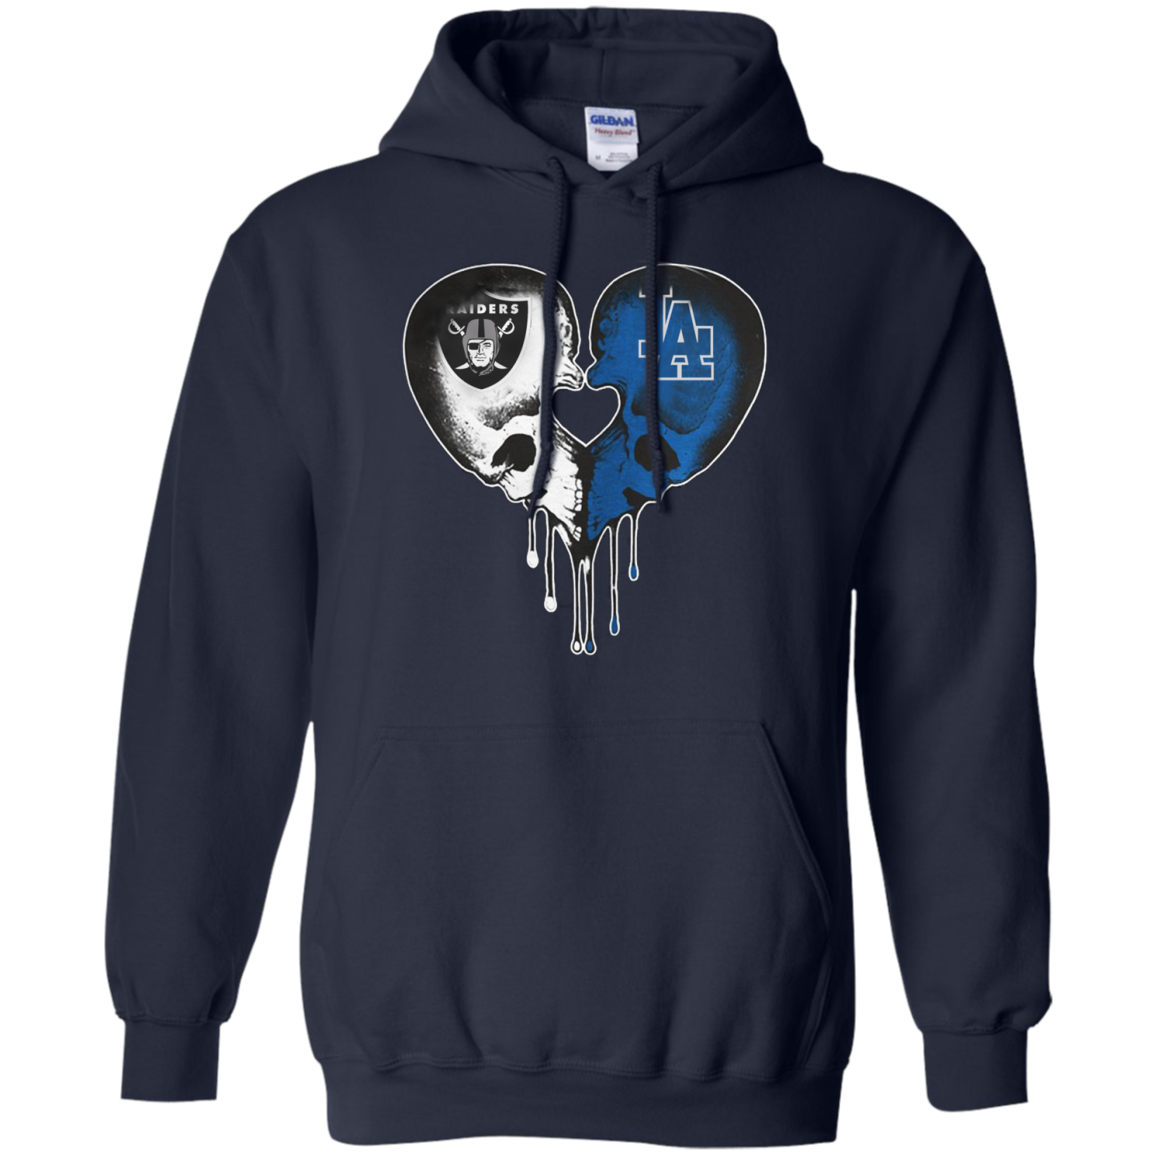 Oakland Raiders and Los Angeles Dodgers skull shirt, hoodie